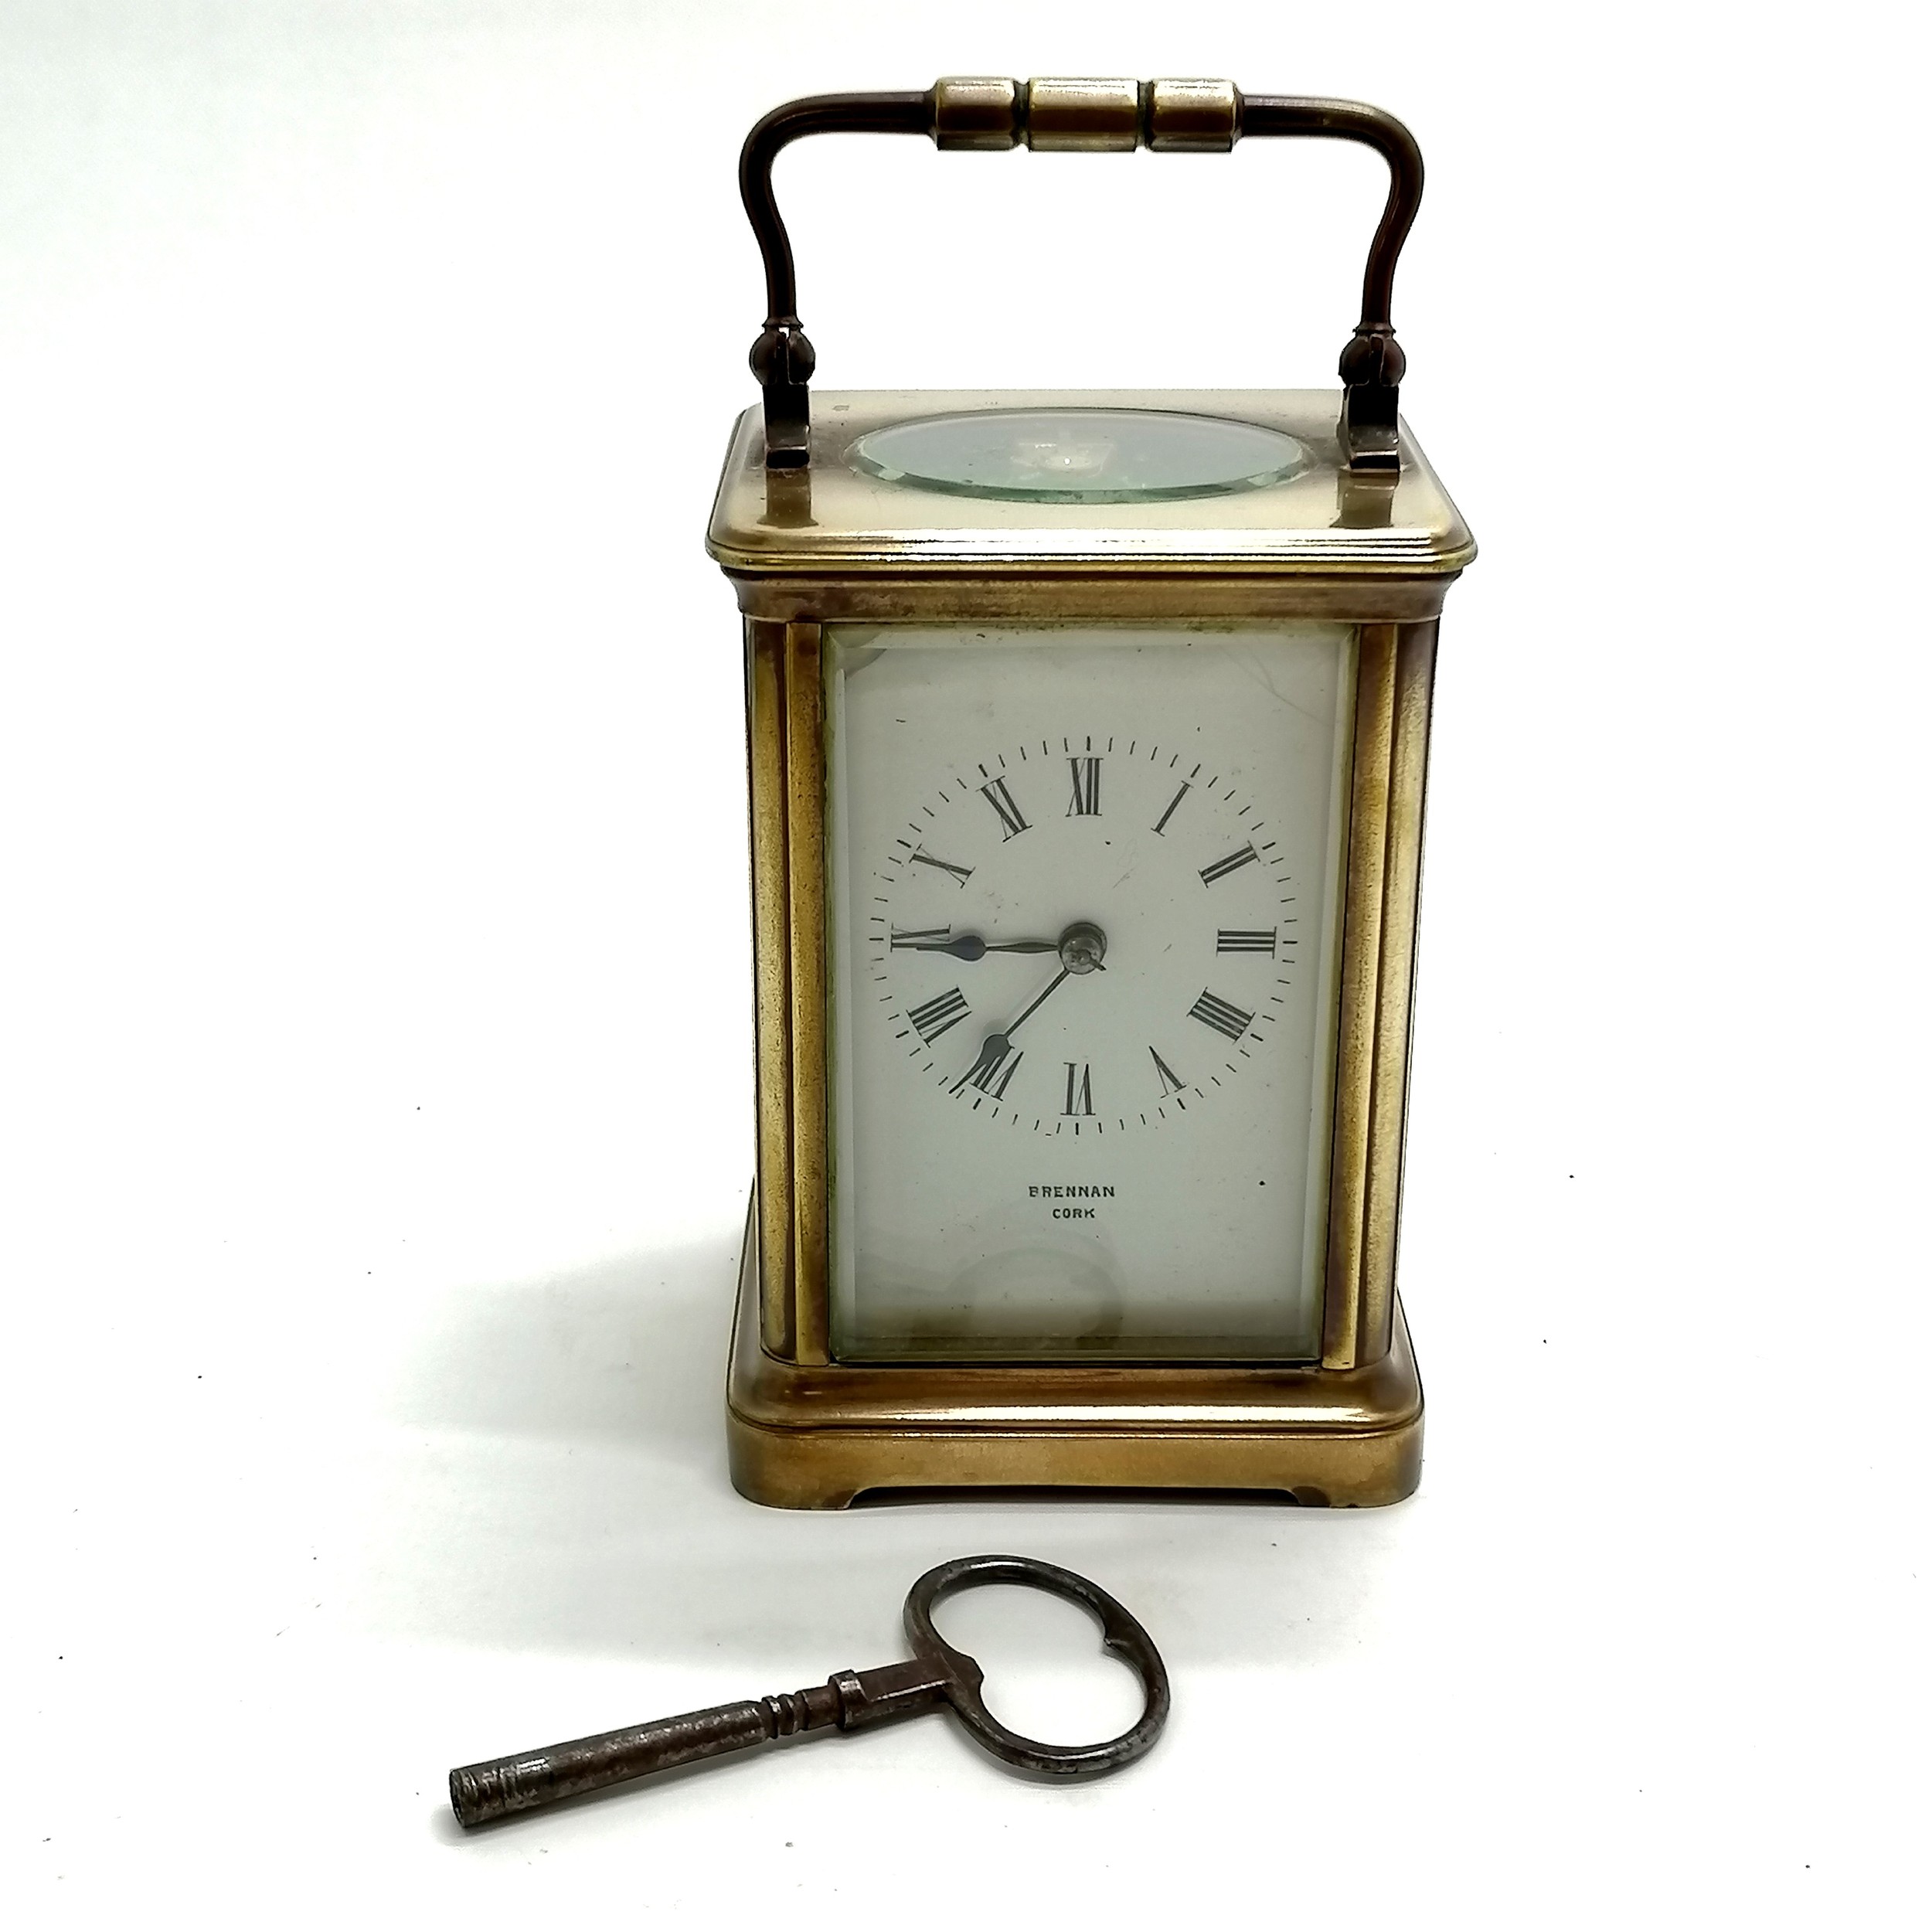 Antique brass carriage clock marked Brennan Cork to porcelain dial - 12cm high x 9cm x 8cm ~ has key